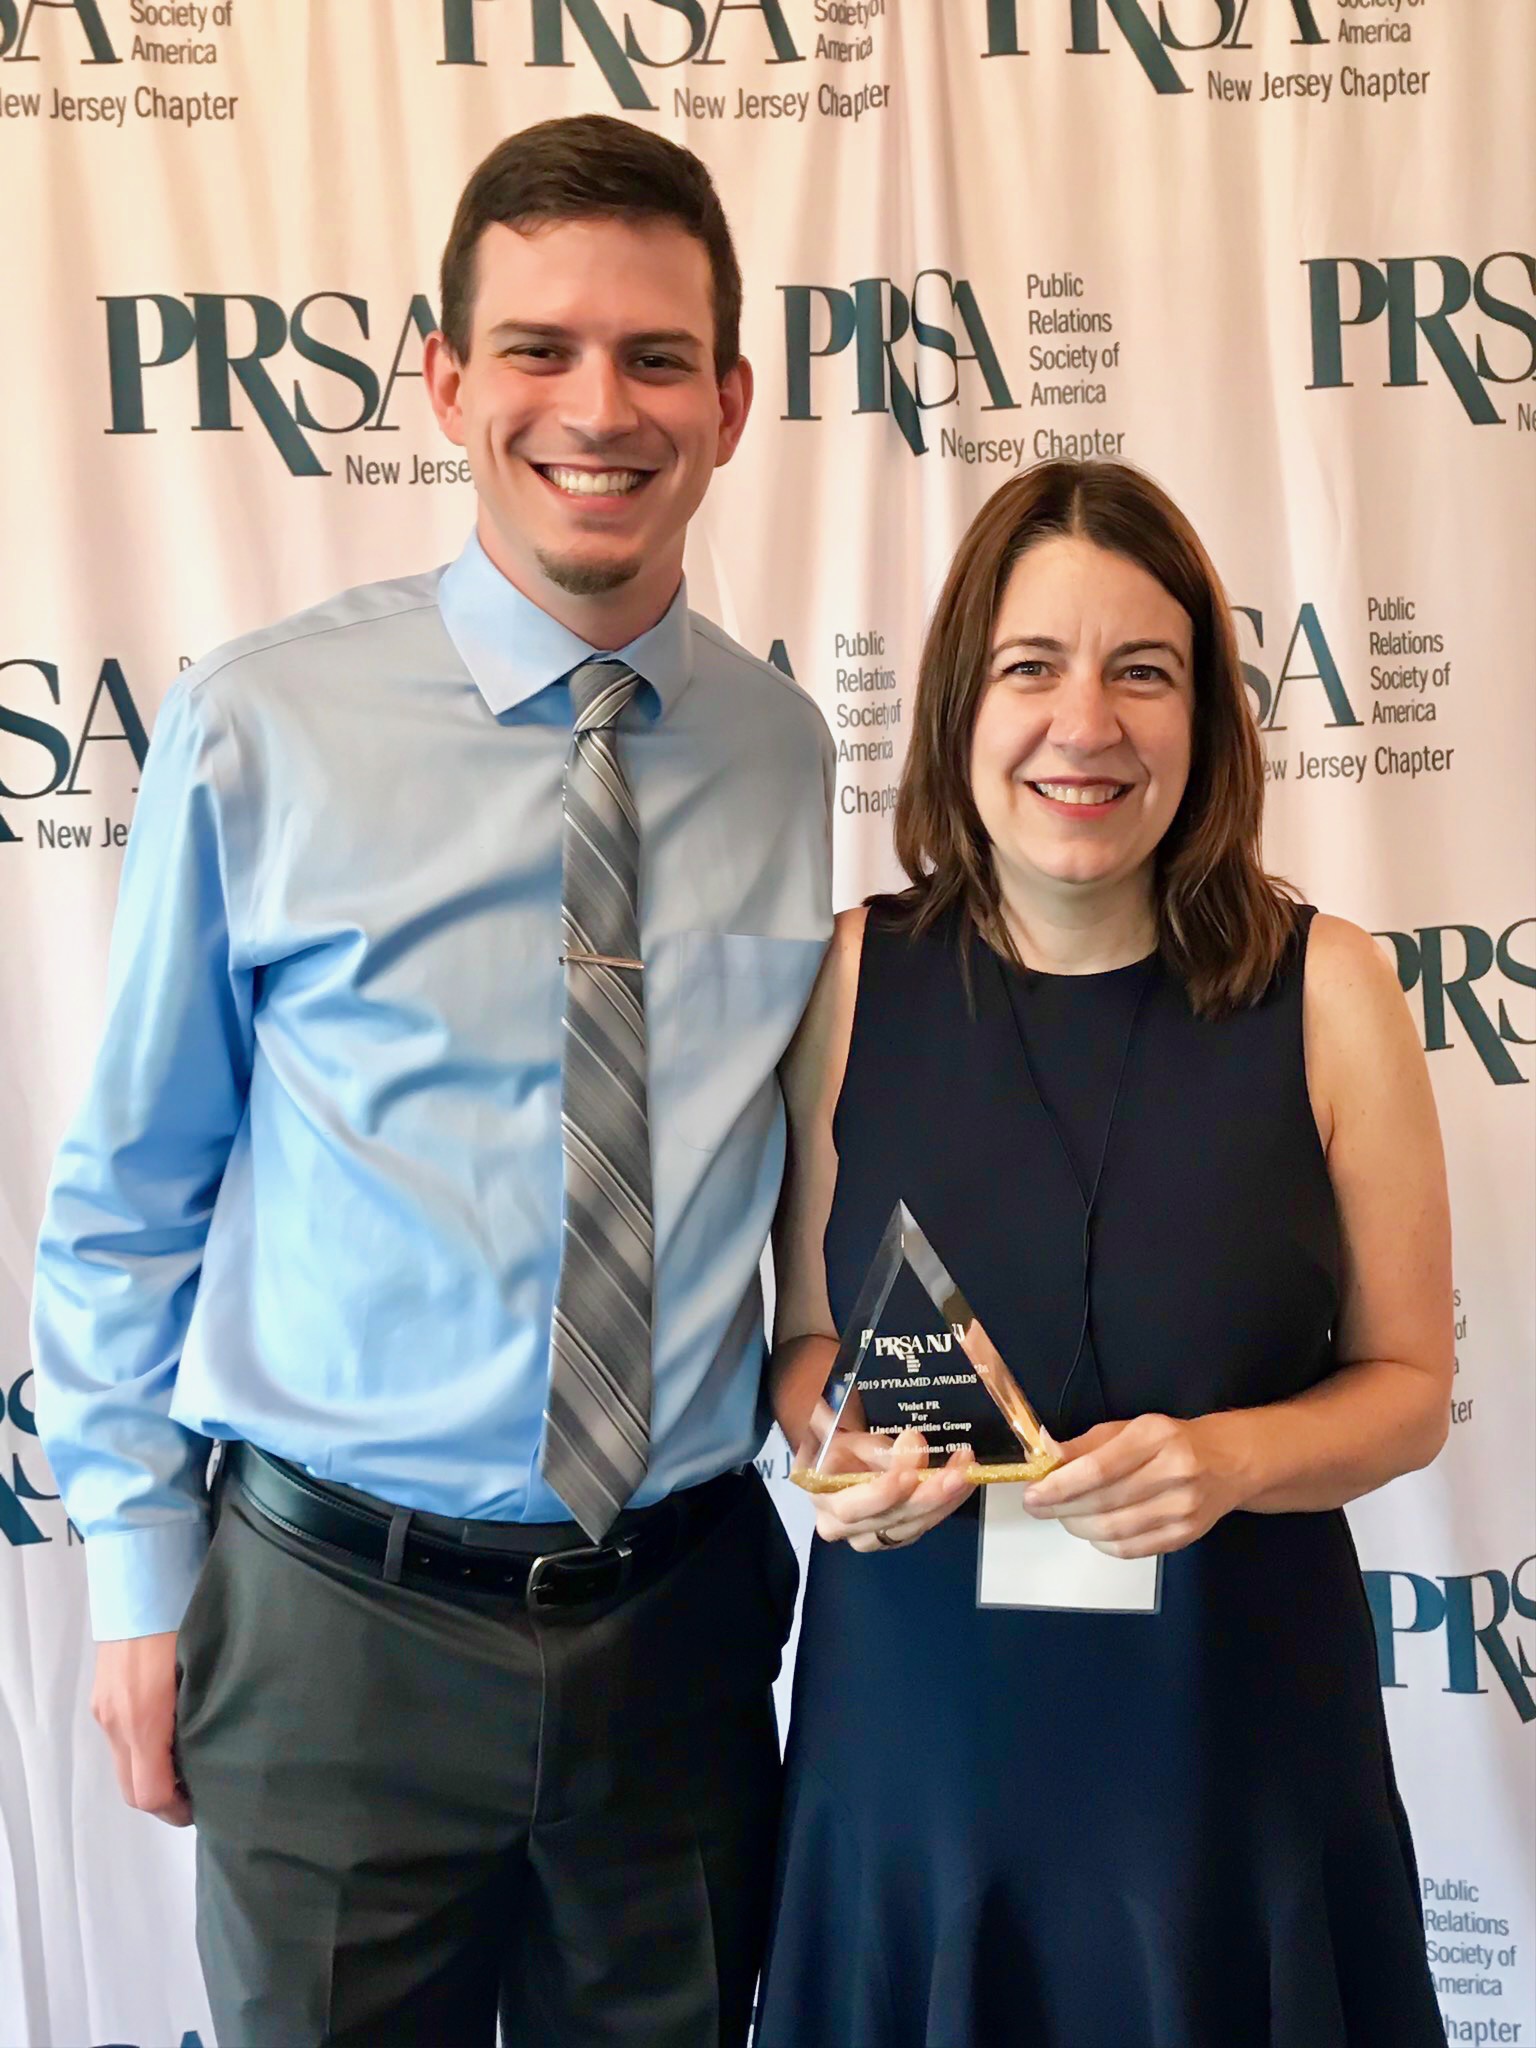 L-R: Dan Gunderman and April Mason of Violet PR are shown after winning a PRSA NJ Pyramid award on June 12, 2019.